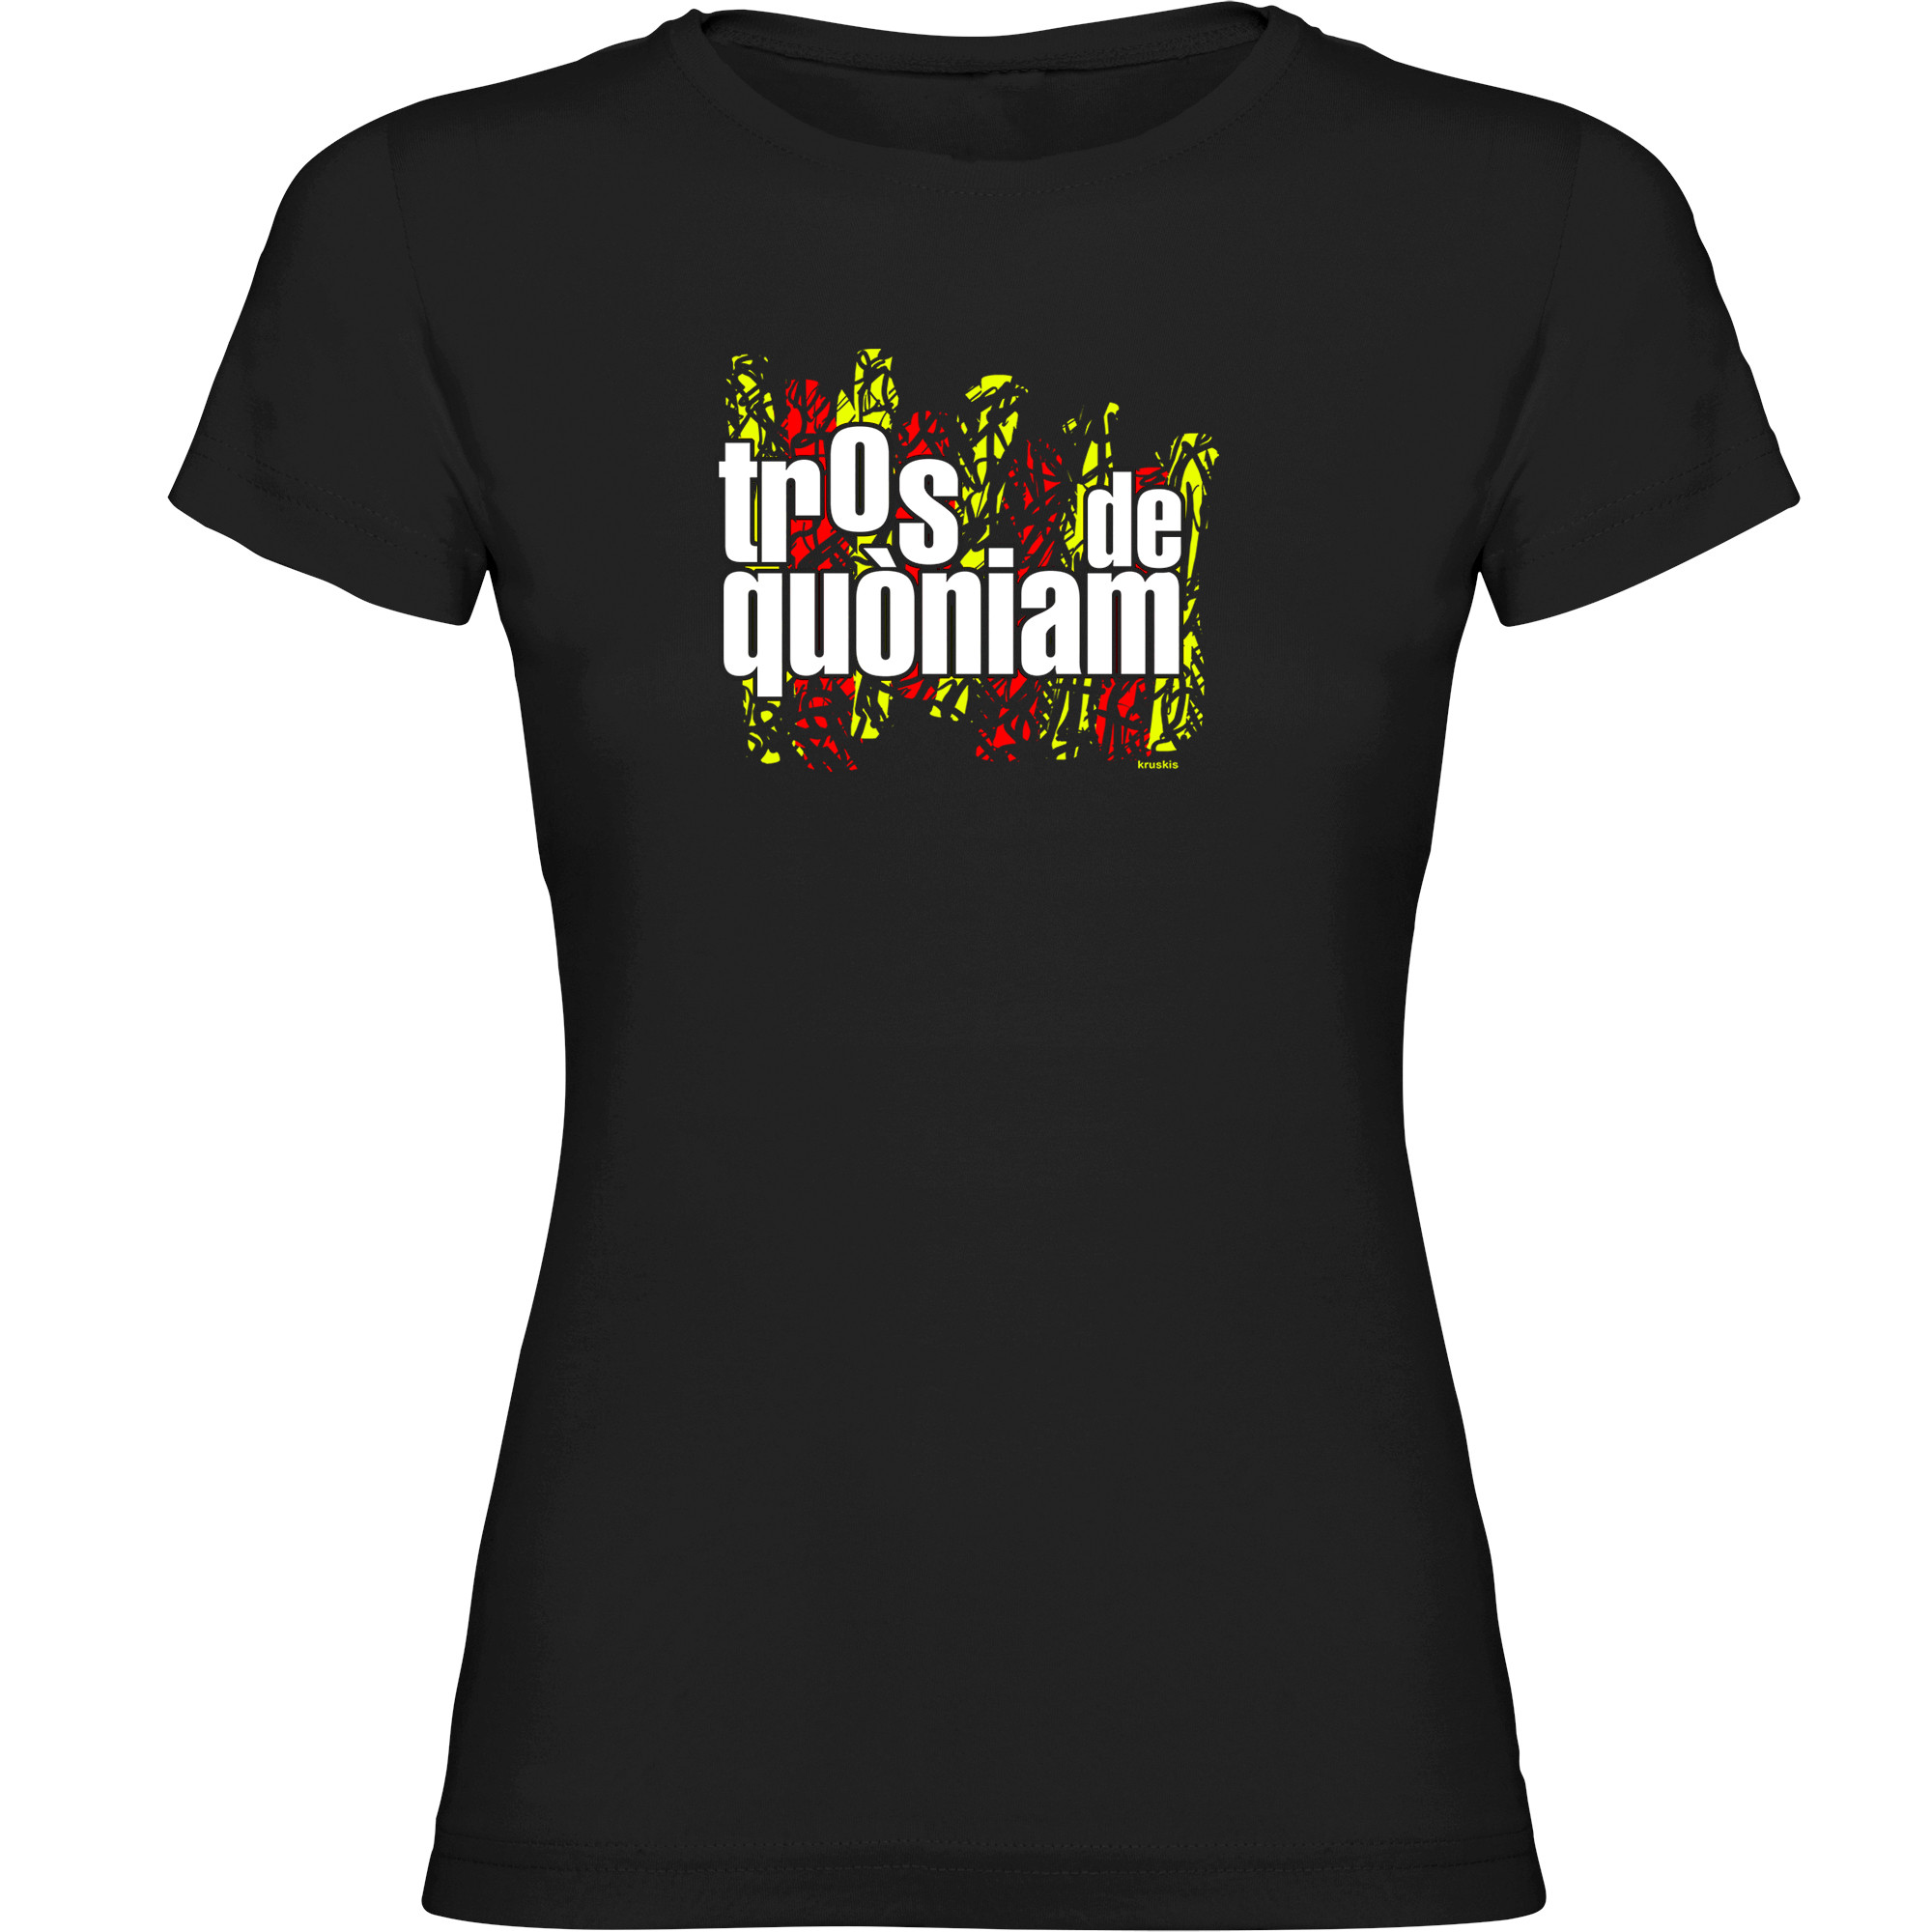 T Shirt Catalogna Tros de Quoniam Manica Corta Donna